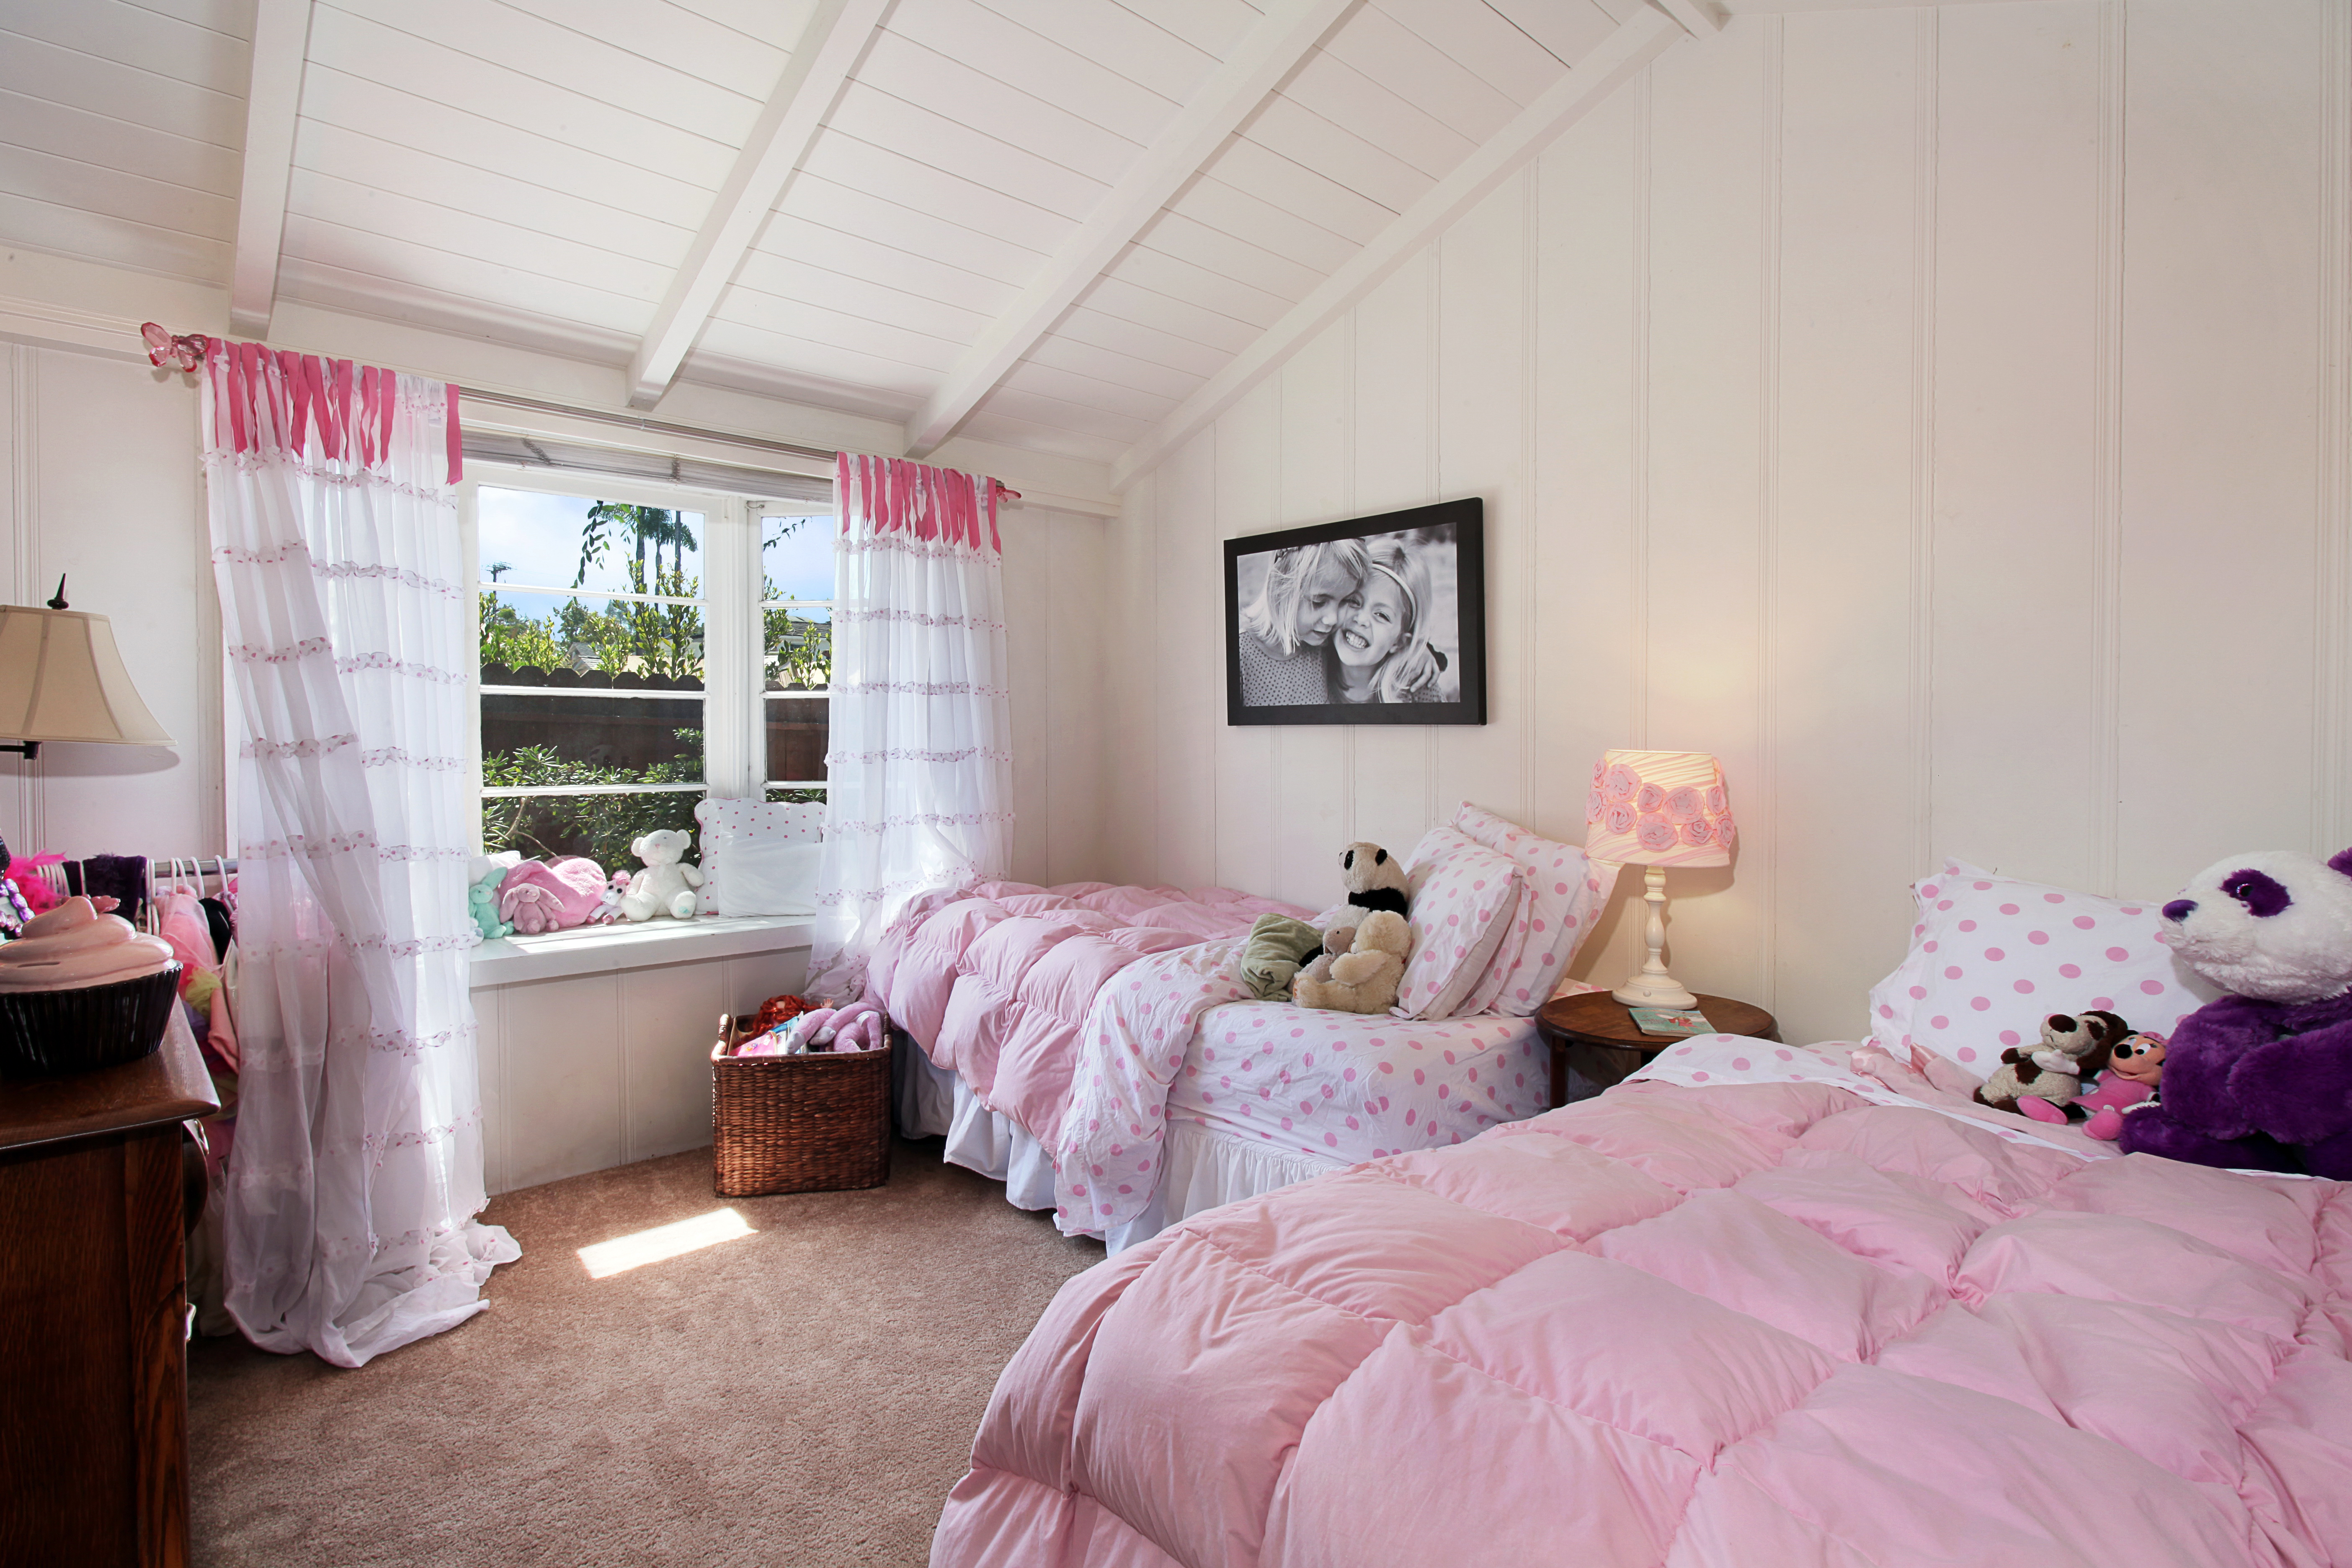 1 комнатка. Уютная комната для девочки. Розовая спальня. Уютная спальня. Уютная спальня для девочки.